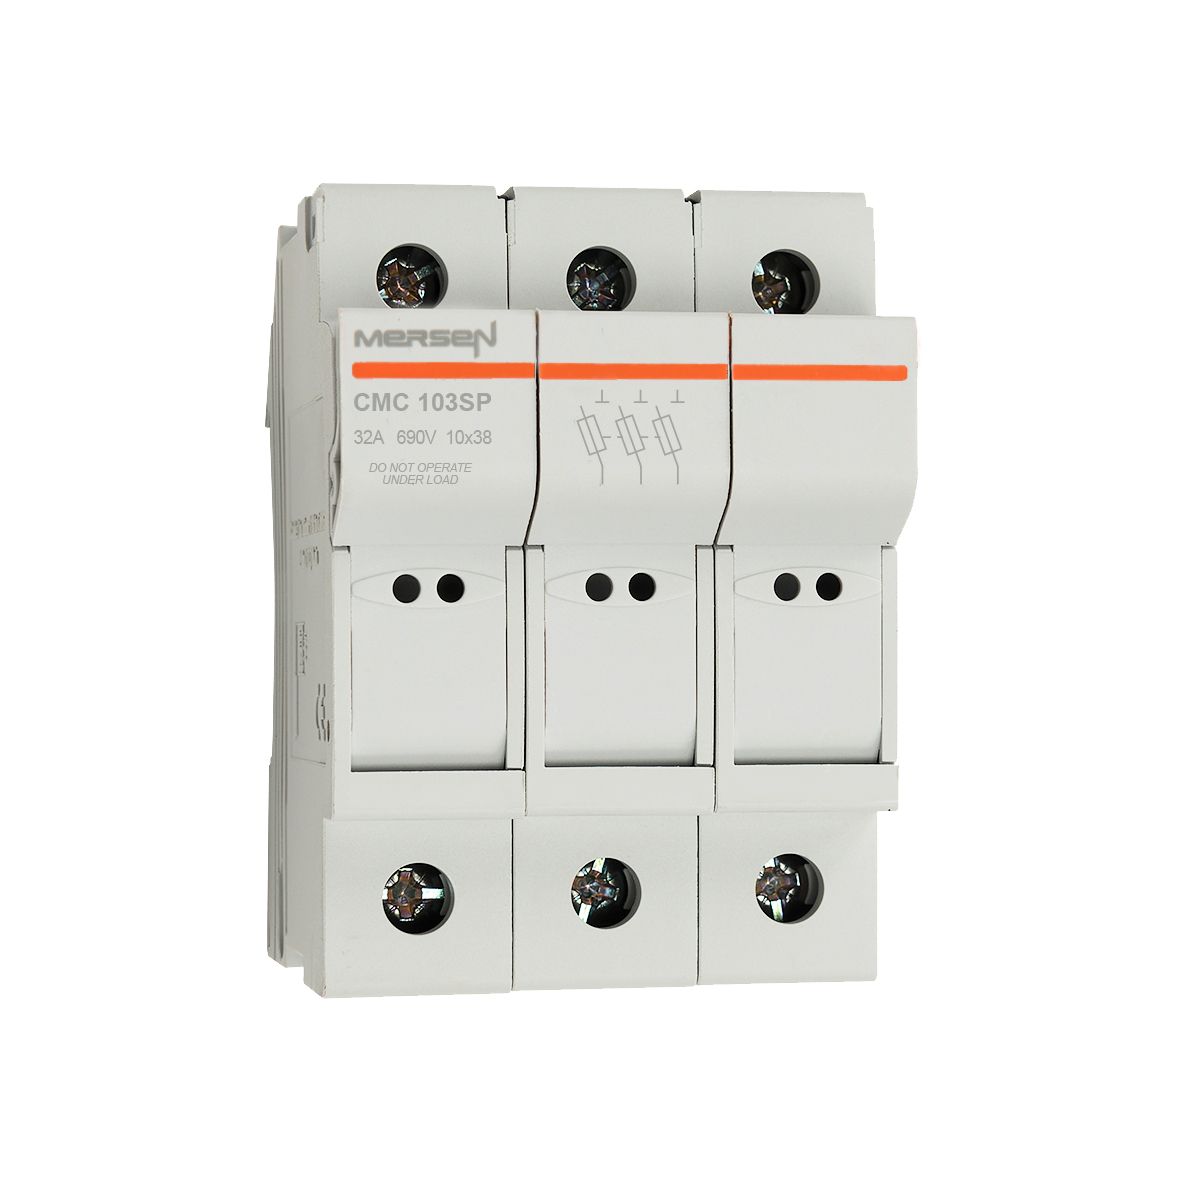 D1062764 - modular fuse holder, IEC, 3-pole, 10x38, DIN rail mounting, IP20